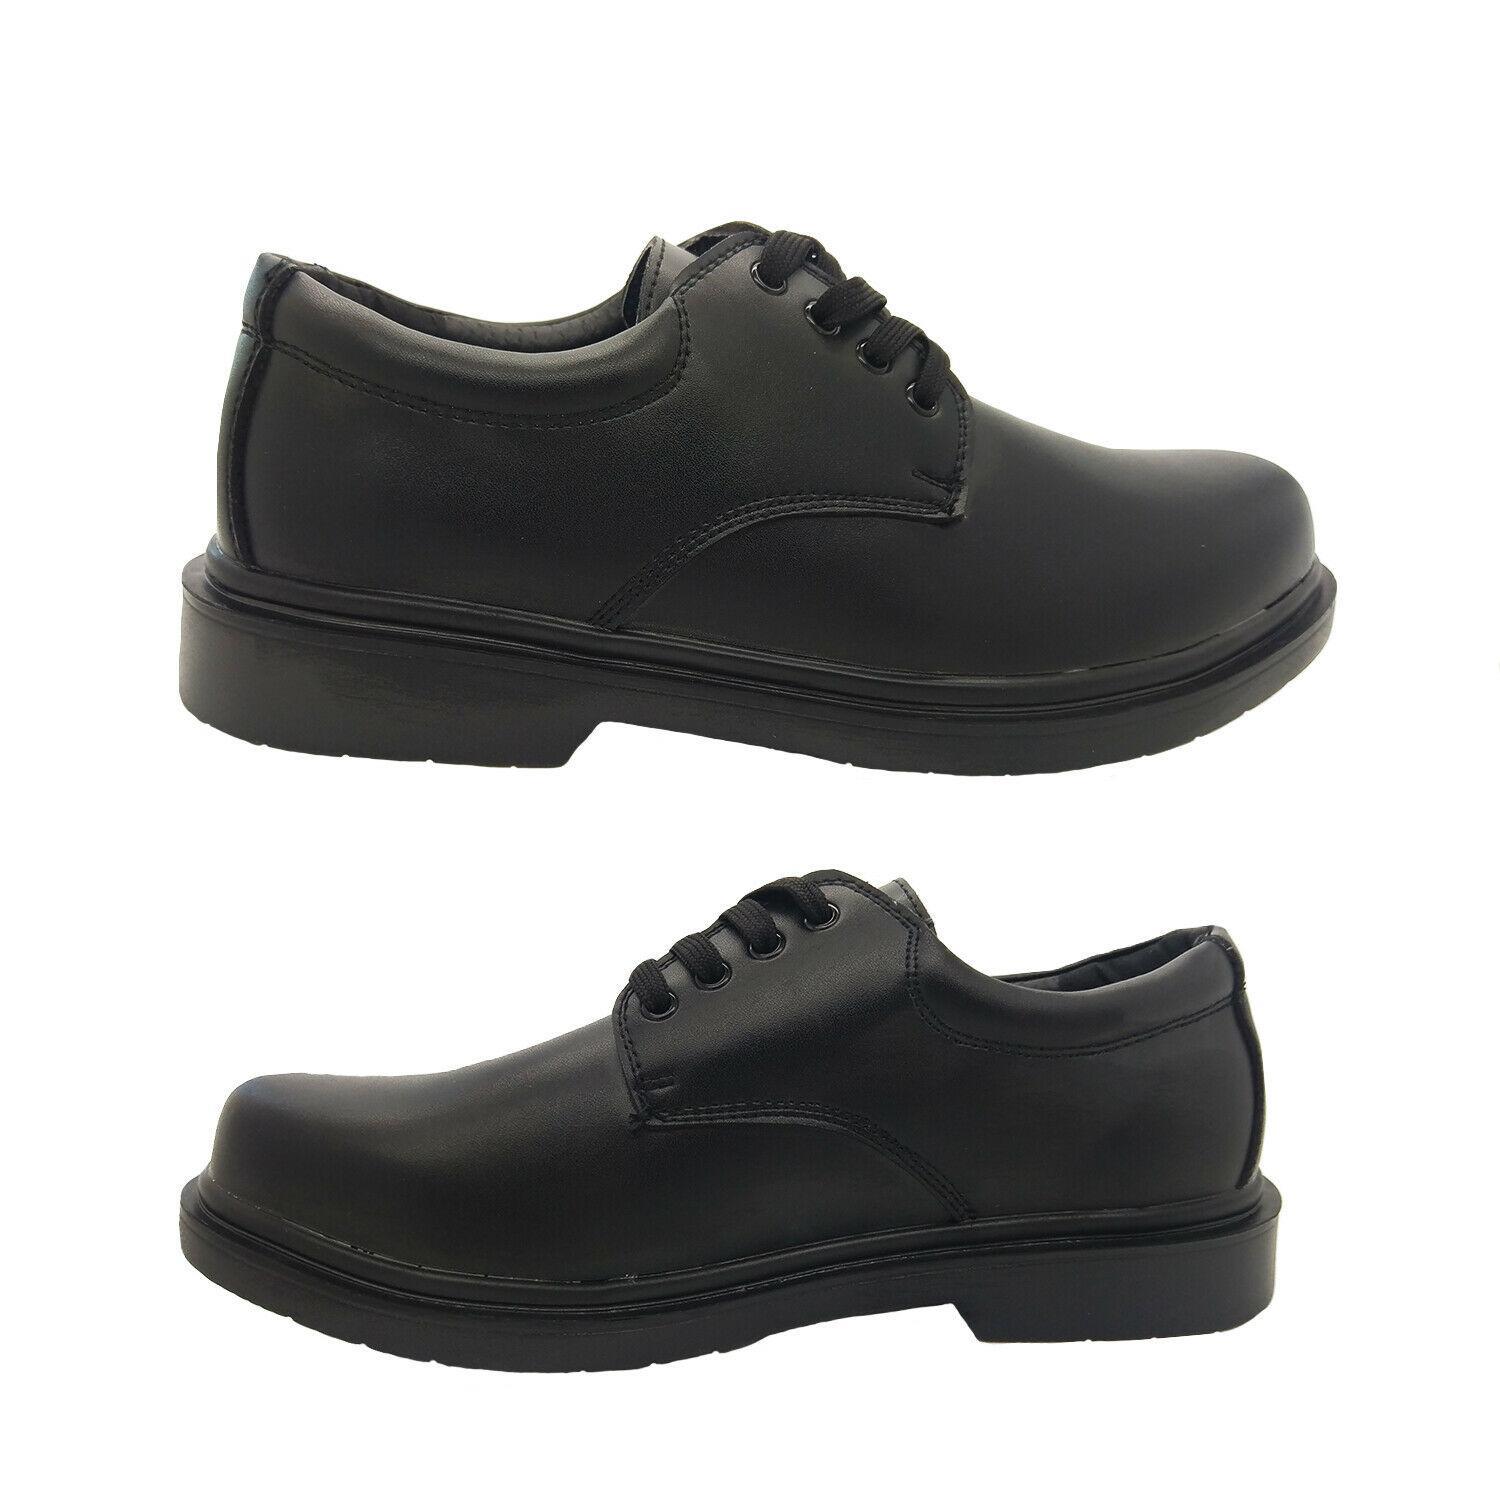 Boys Shoes Grosby Hamburg Jnr Black Boys/Youth Leather School Shoe Size 13-5 NEW Black 13